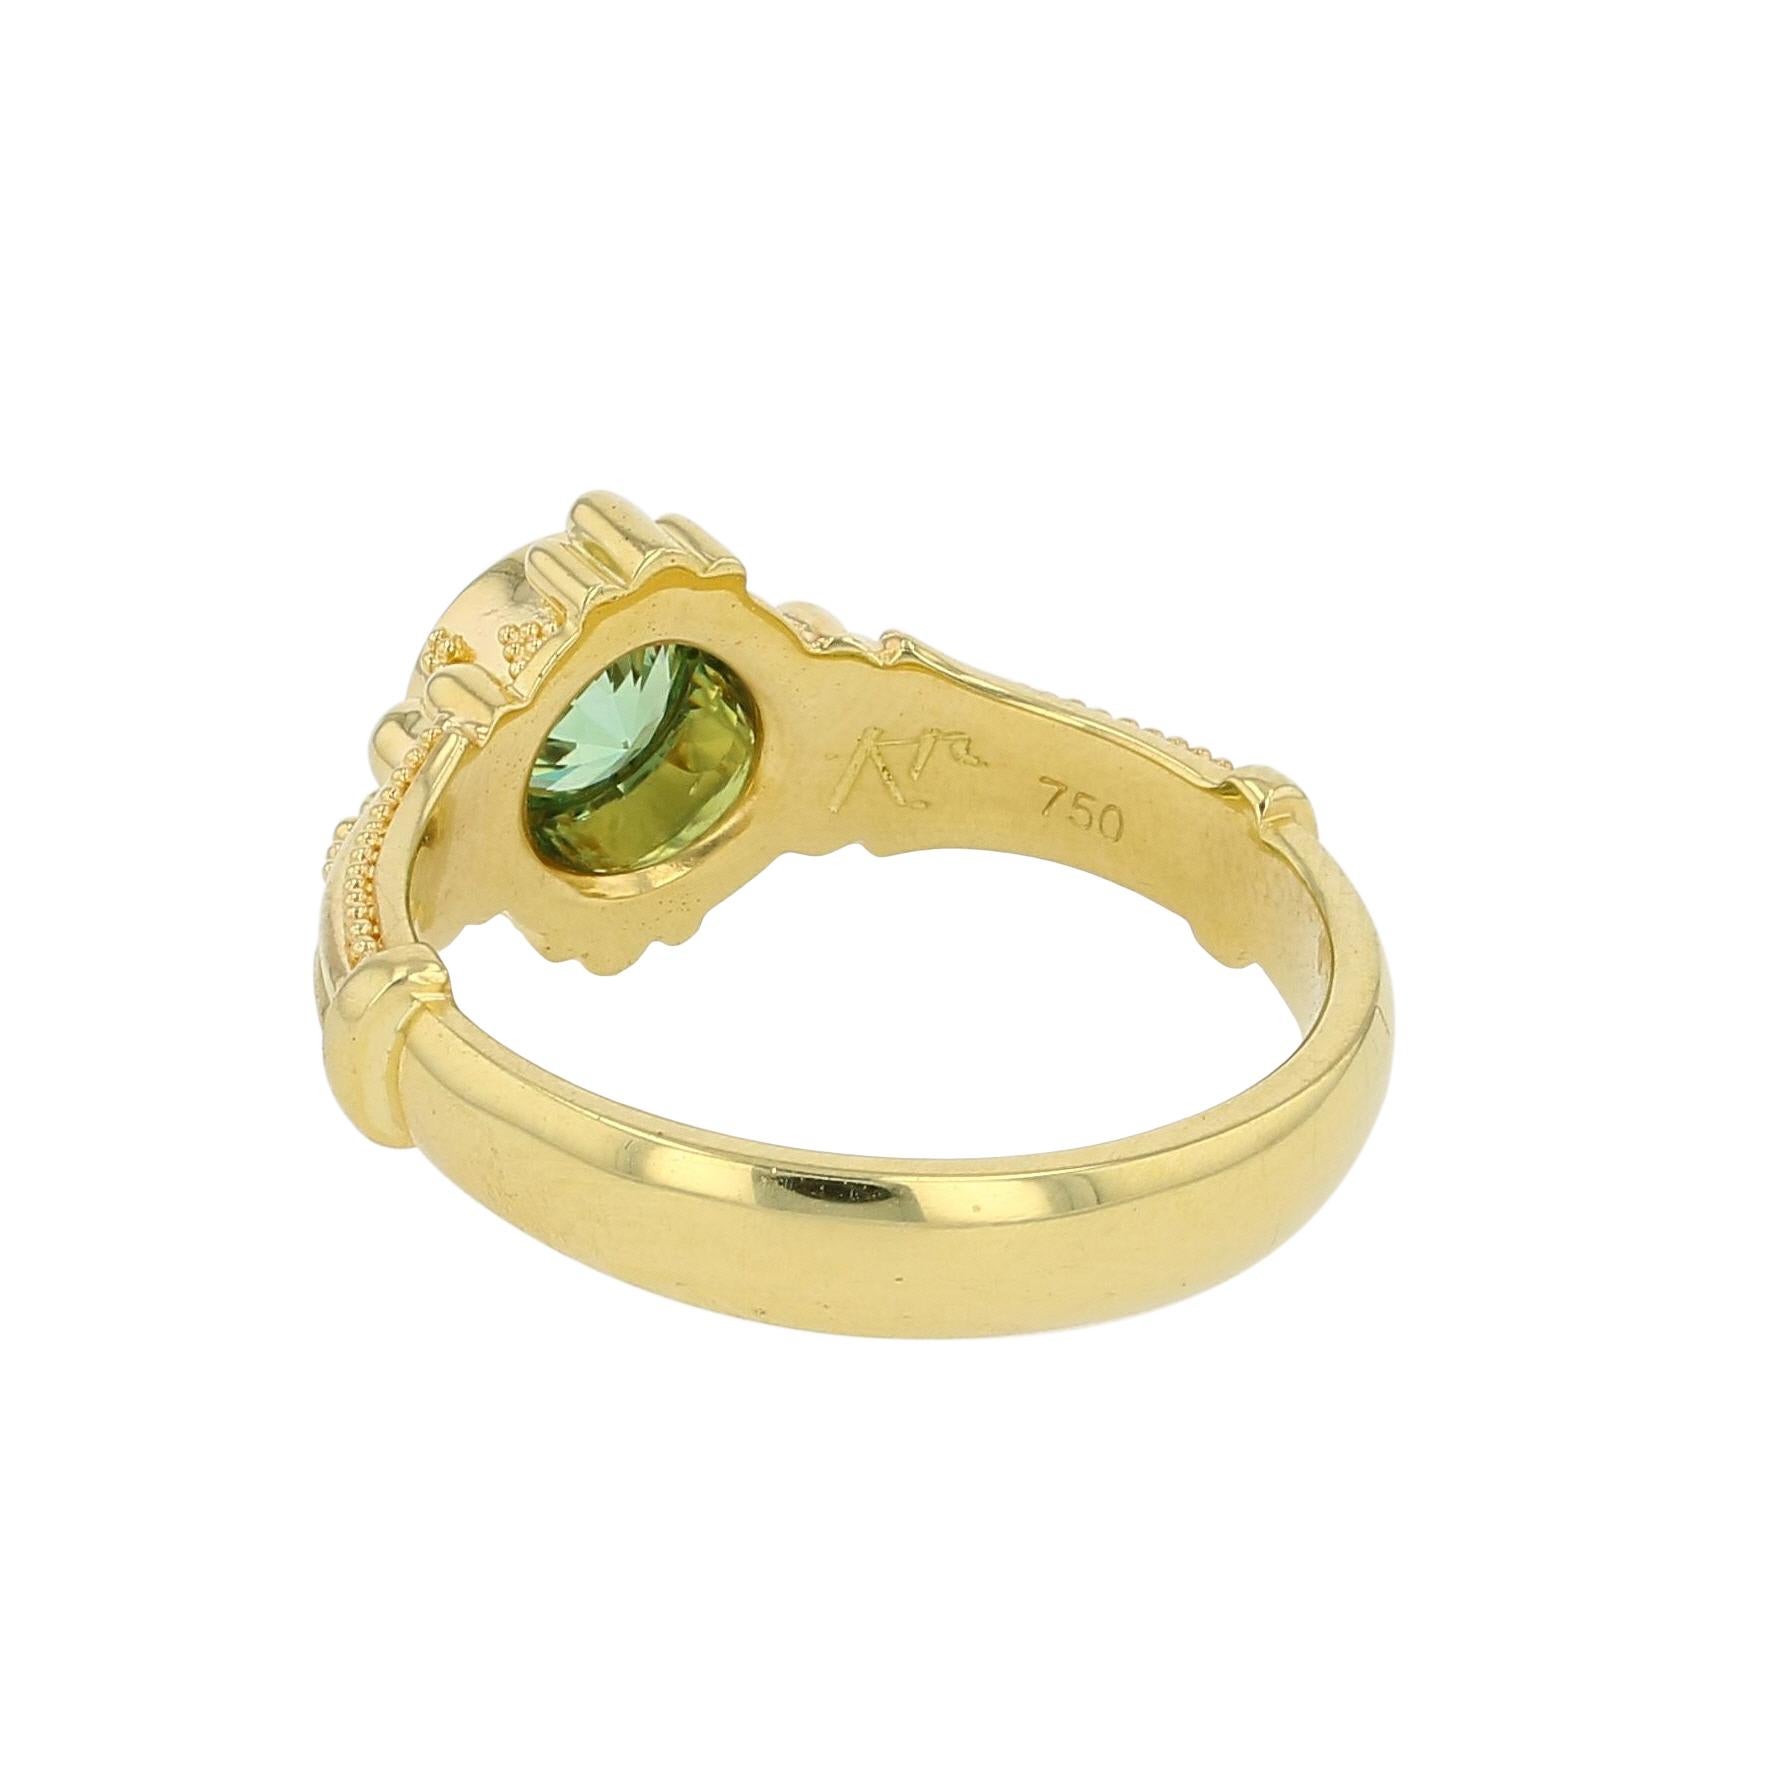 Kent Raible 18 Karat Gold Green Garnet Solitaire Ring with Fine Granulation 2